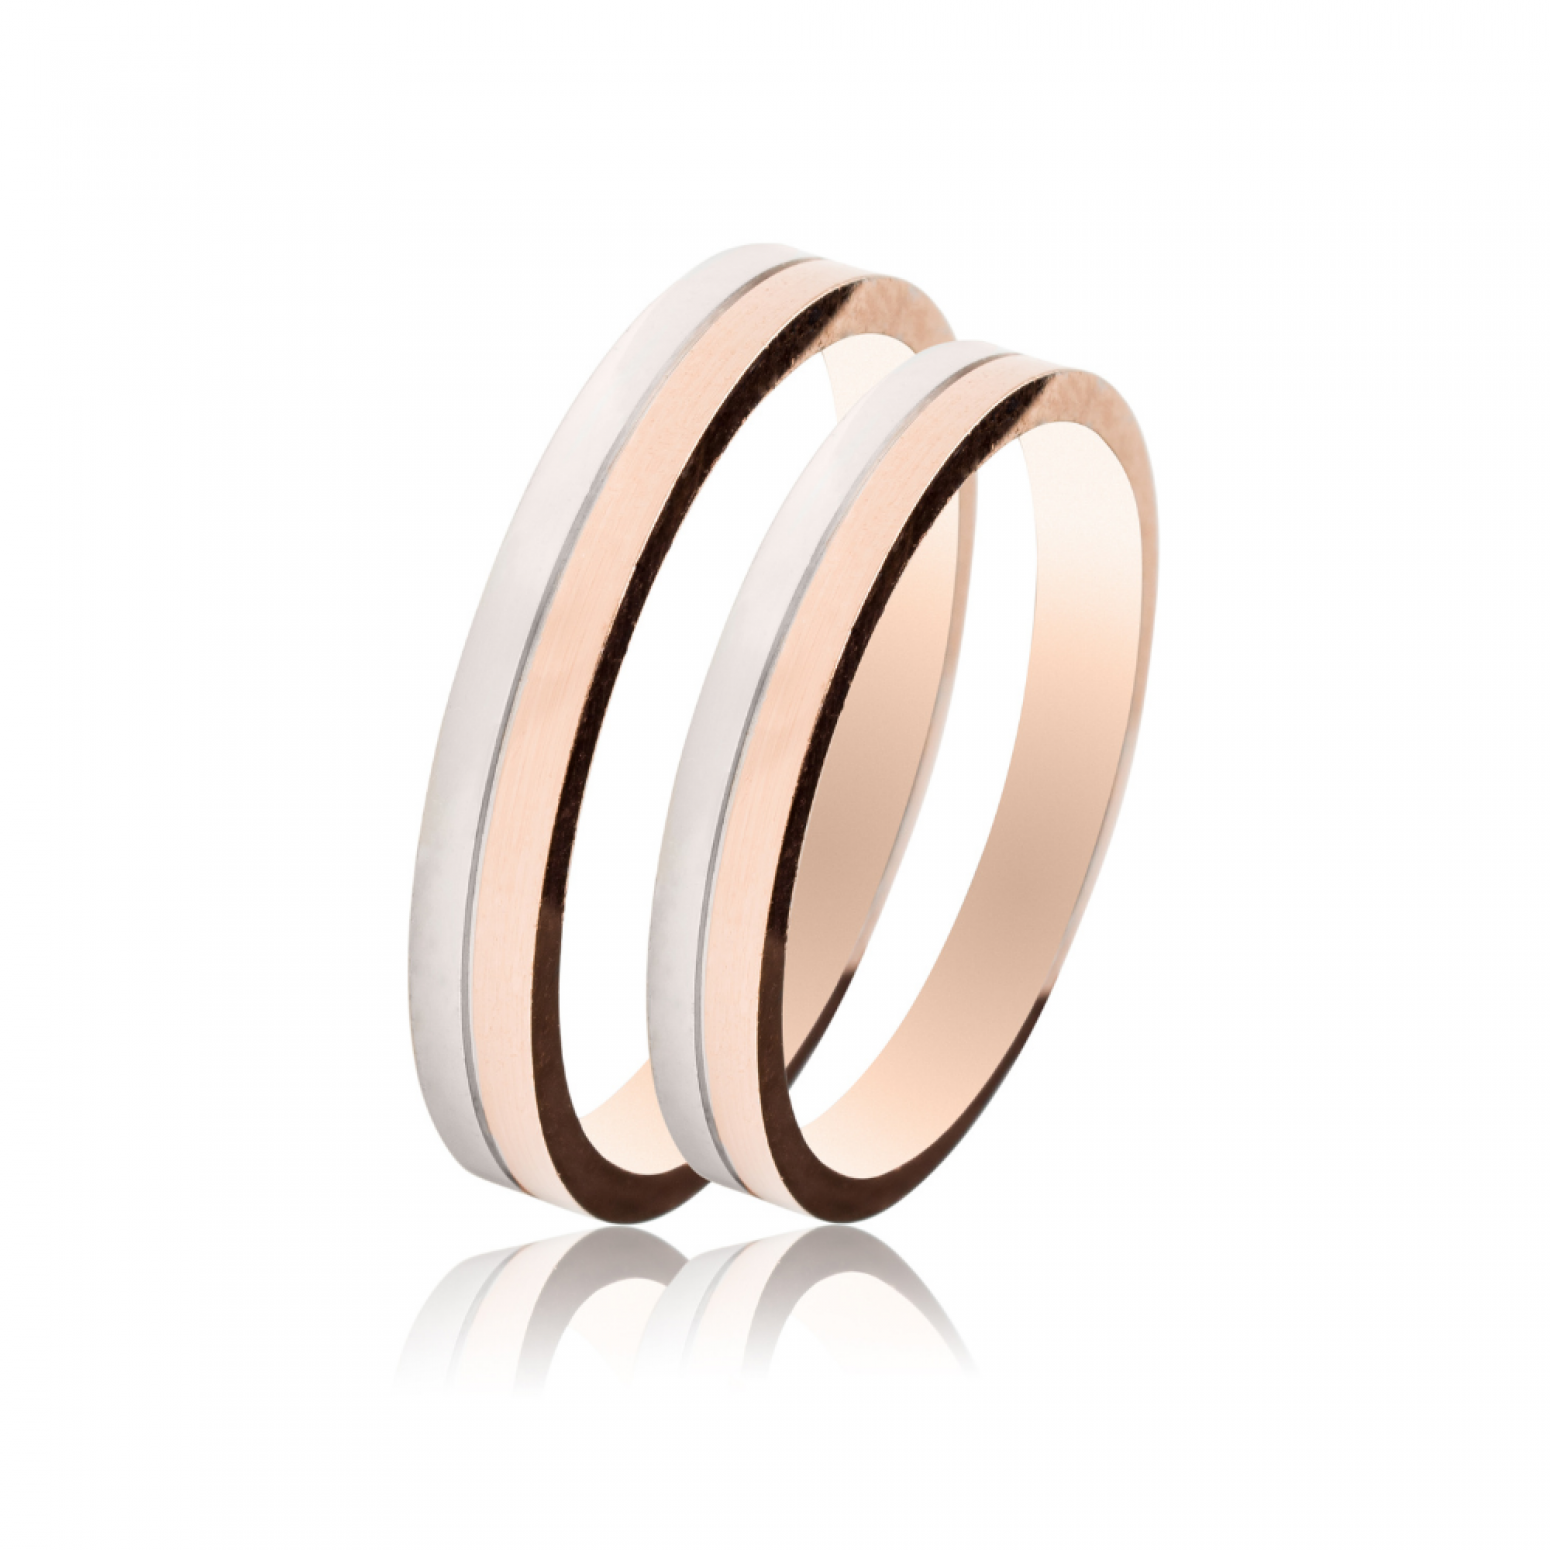 Maschio Femmina wedding rings in white and pink gold, K9, pair da4046 WEDDING RINGS Κοσμηματα - chrilia.gr